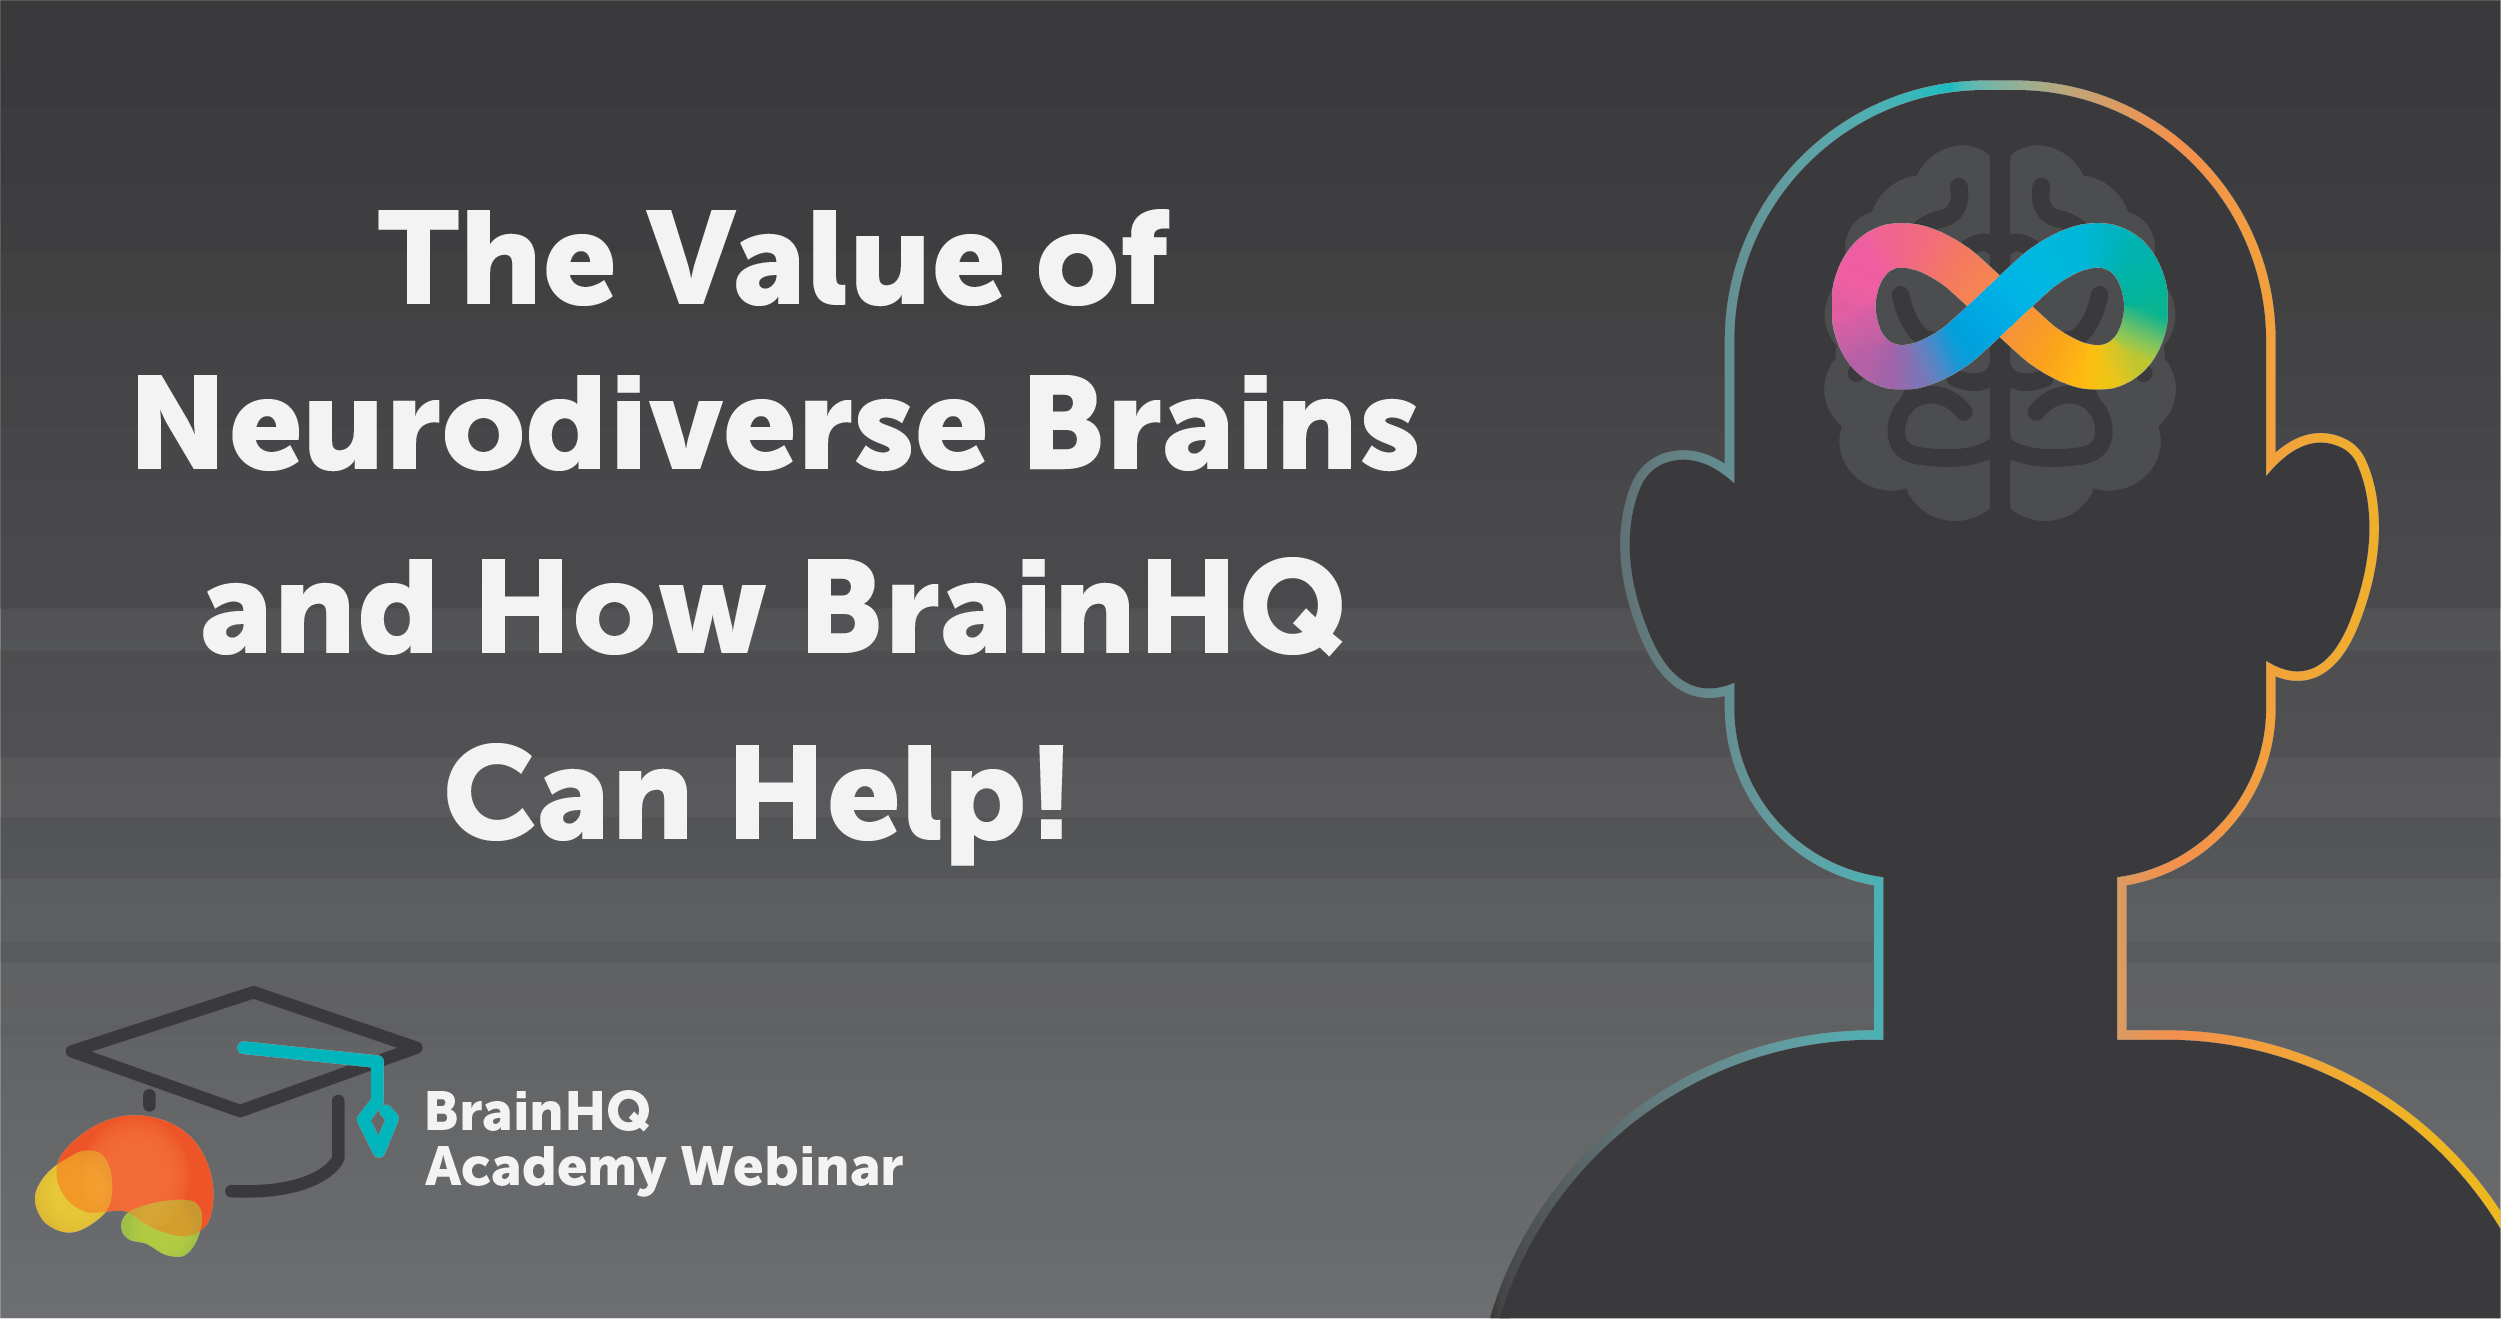 BrainHQ Academy: The Value of Neurodiverse Brains